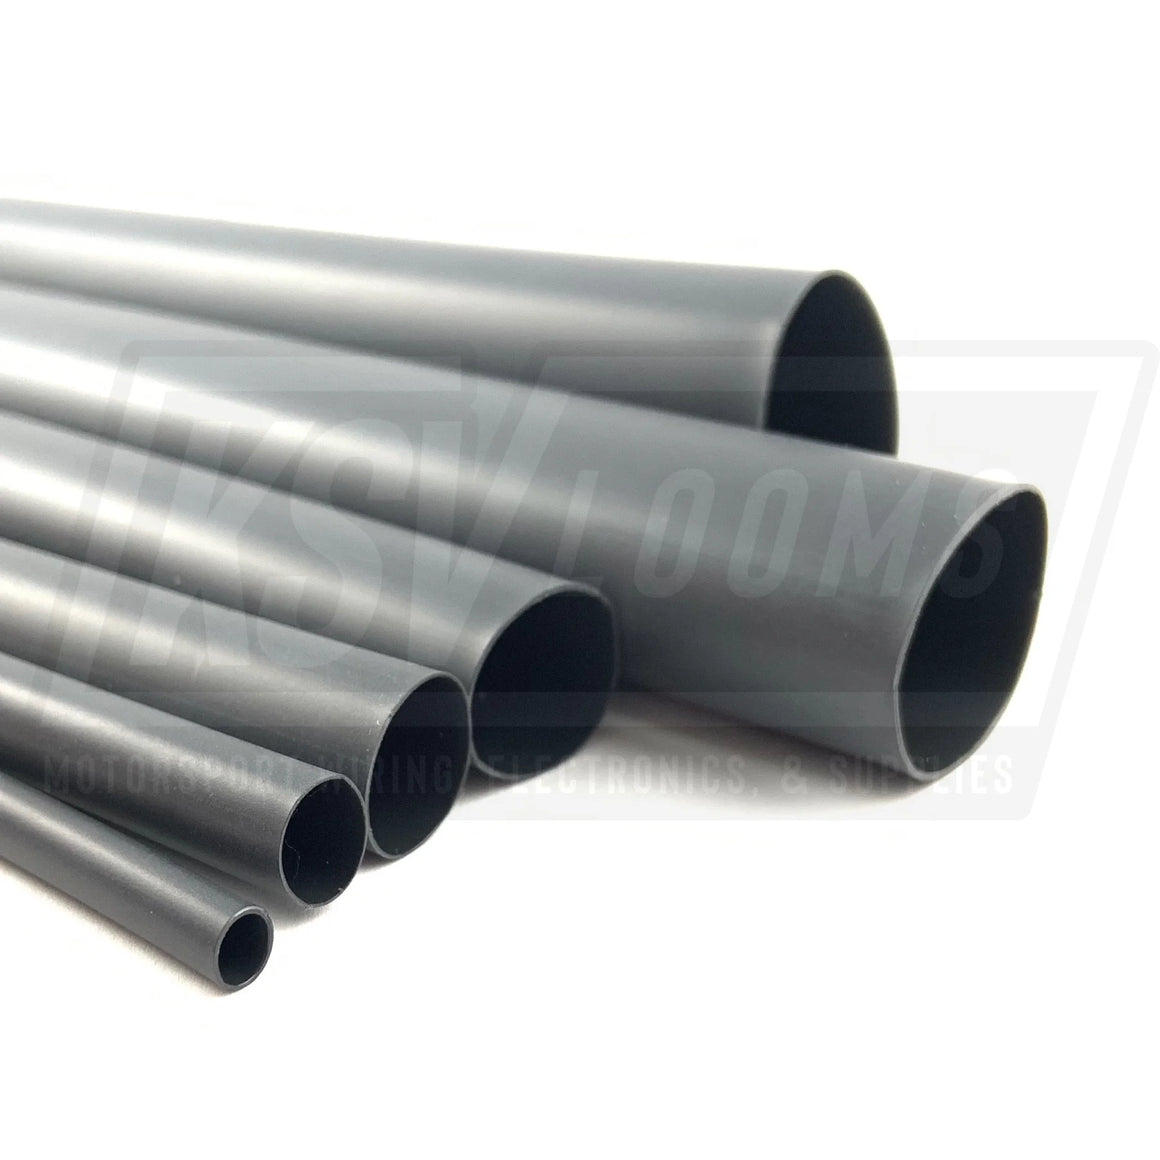 1’ Raychem Atum Heat Shrink Adhesive Lined Tubing